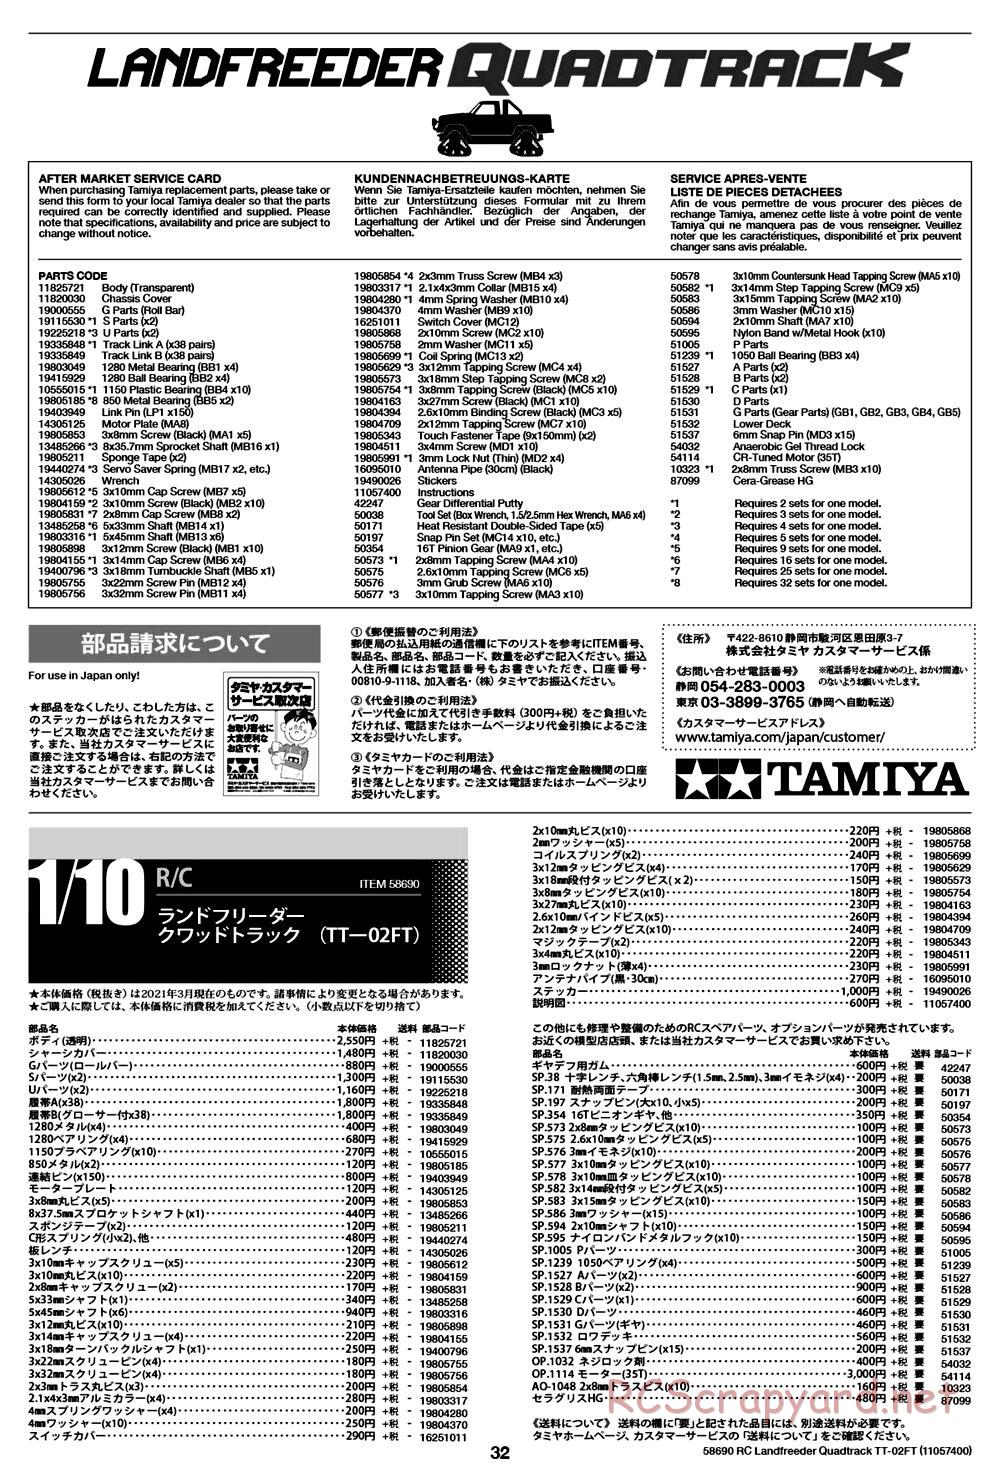 Tamiya - Landfreeder Quadtrack - TT-02FT Chassis - Manual - Page 32